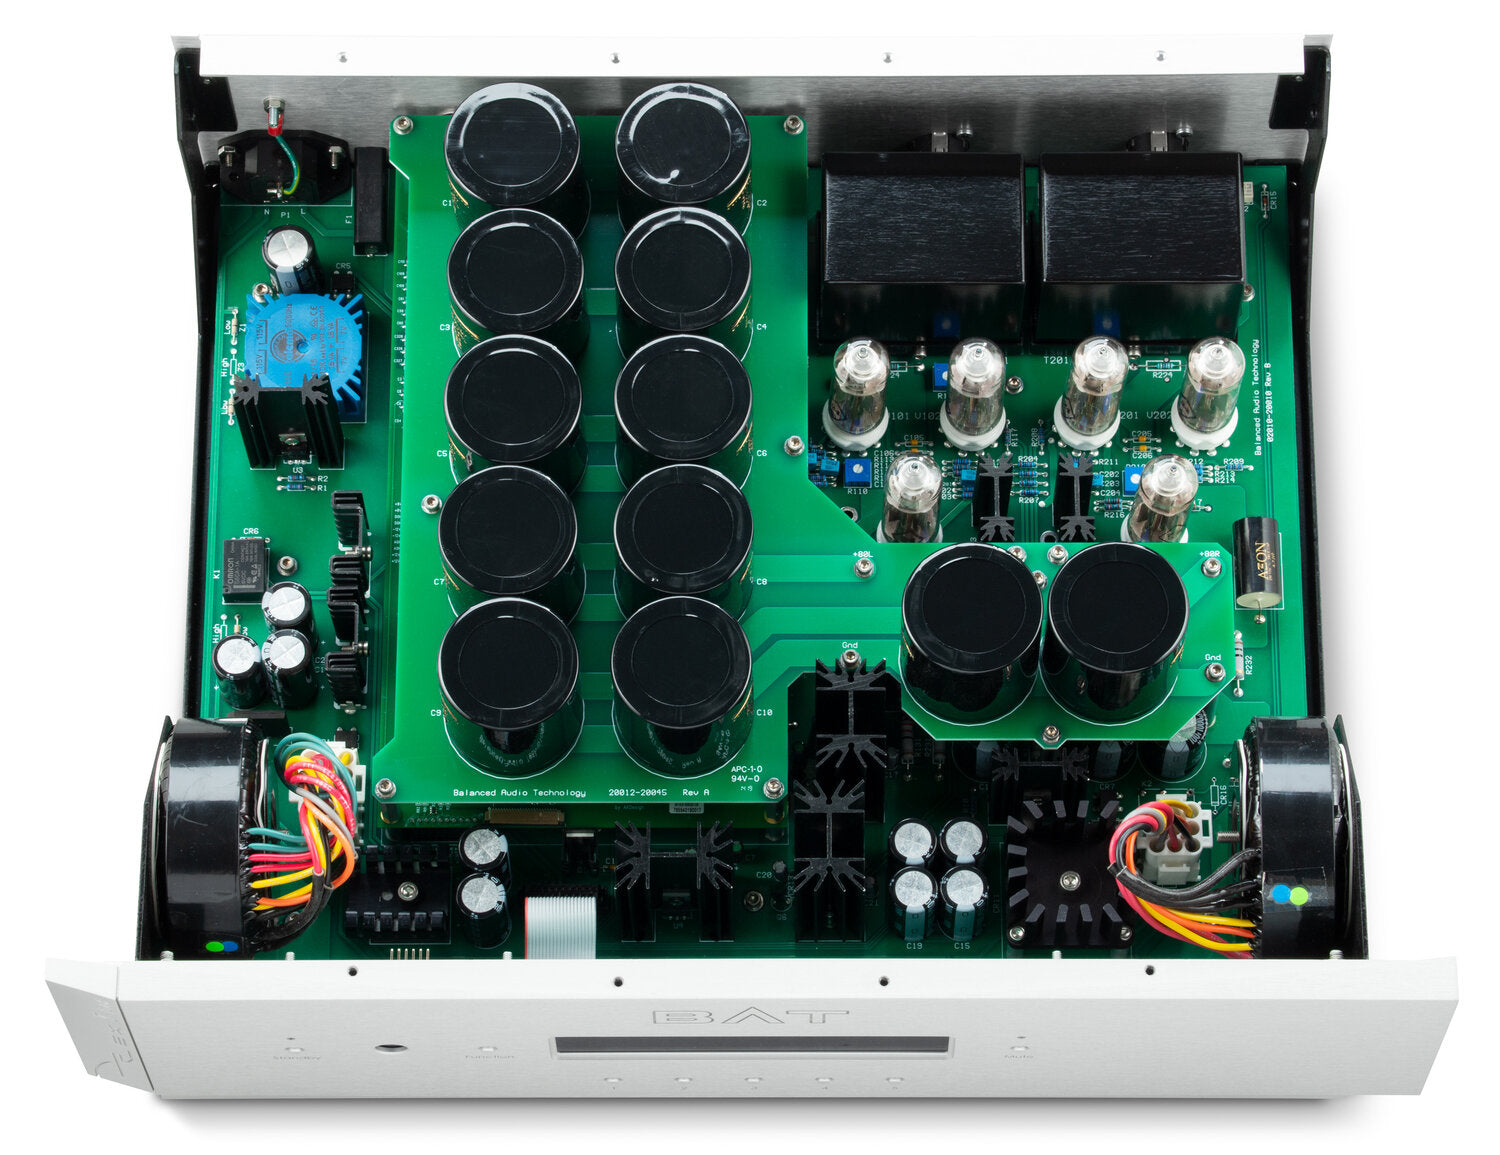 BAT REX 3 DAC - Balanced Audio Technology create ultra-high-end vacuum-tube audio: BAT Tube Power Amplifier, BAT Power Amplifier, BAT Tube Preamplifier, BAT Hybrid Integrated Amplifier, BAT Tube Integrated Amplifier, A BAT mplifier, Amplifiers, Preamplifiers, Integrated Amplifiers, Power Amplifiers, Compact Disc Player… 